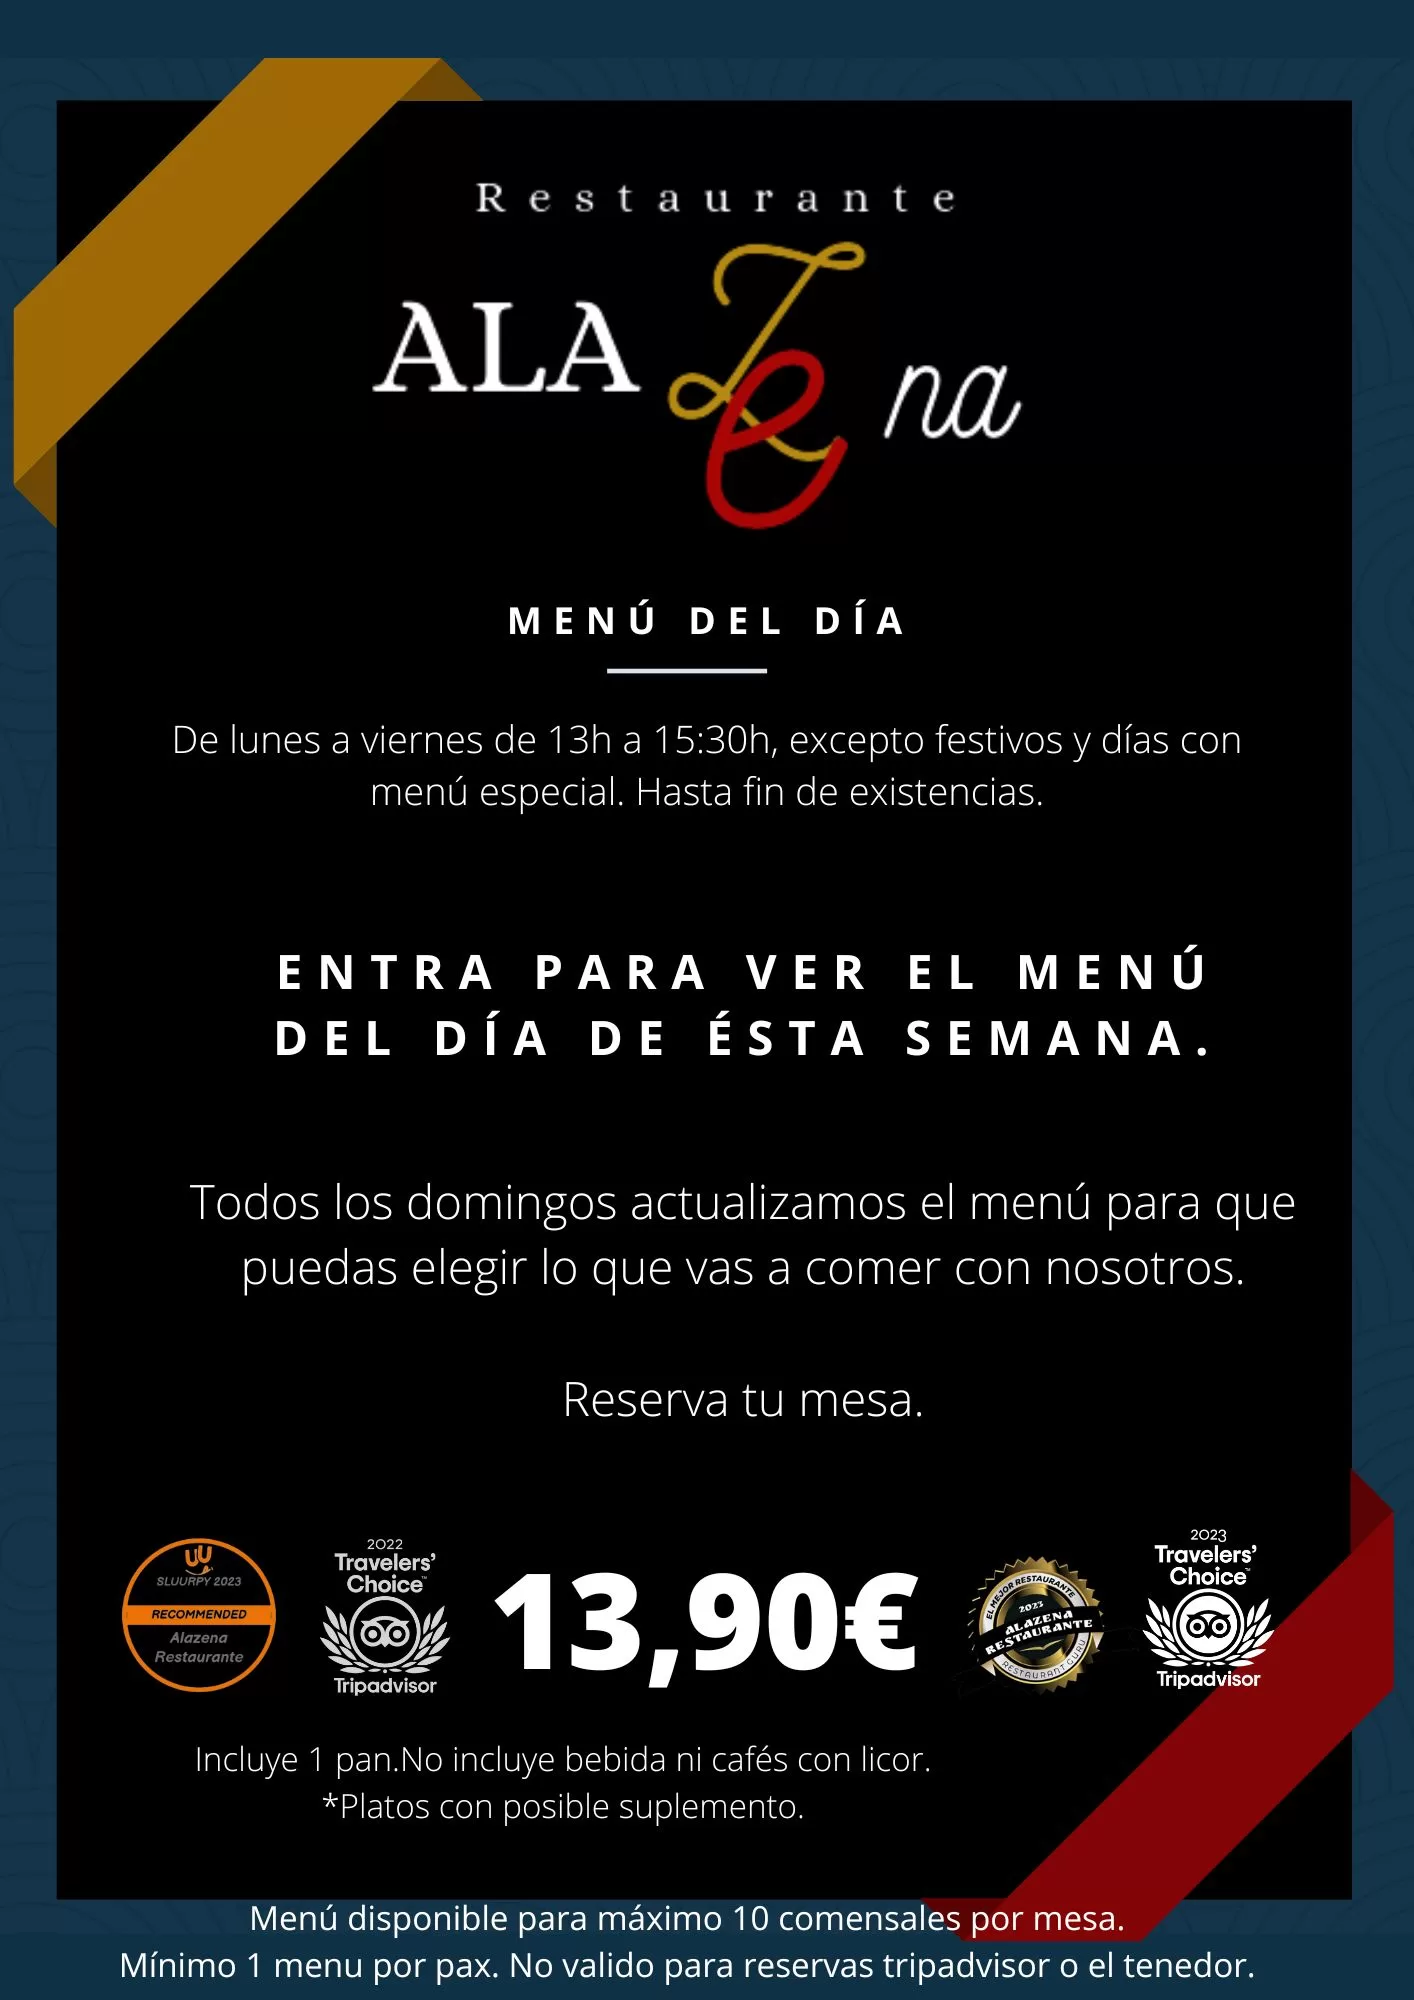 Menu del dia Alazena Restaurante San Vicente del Raspeig 13,90€